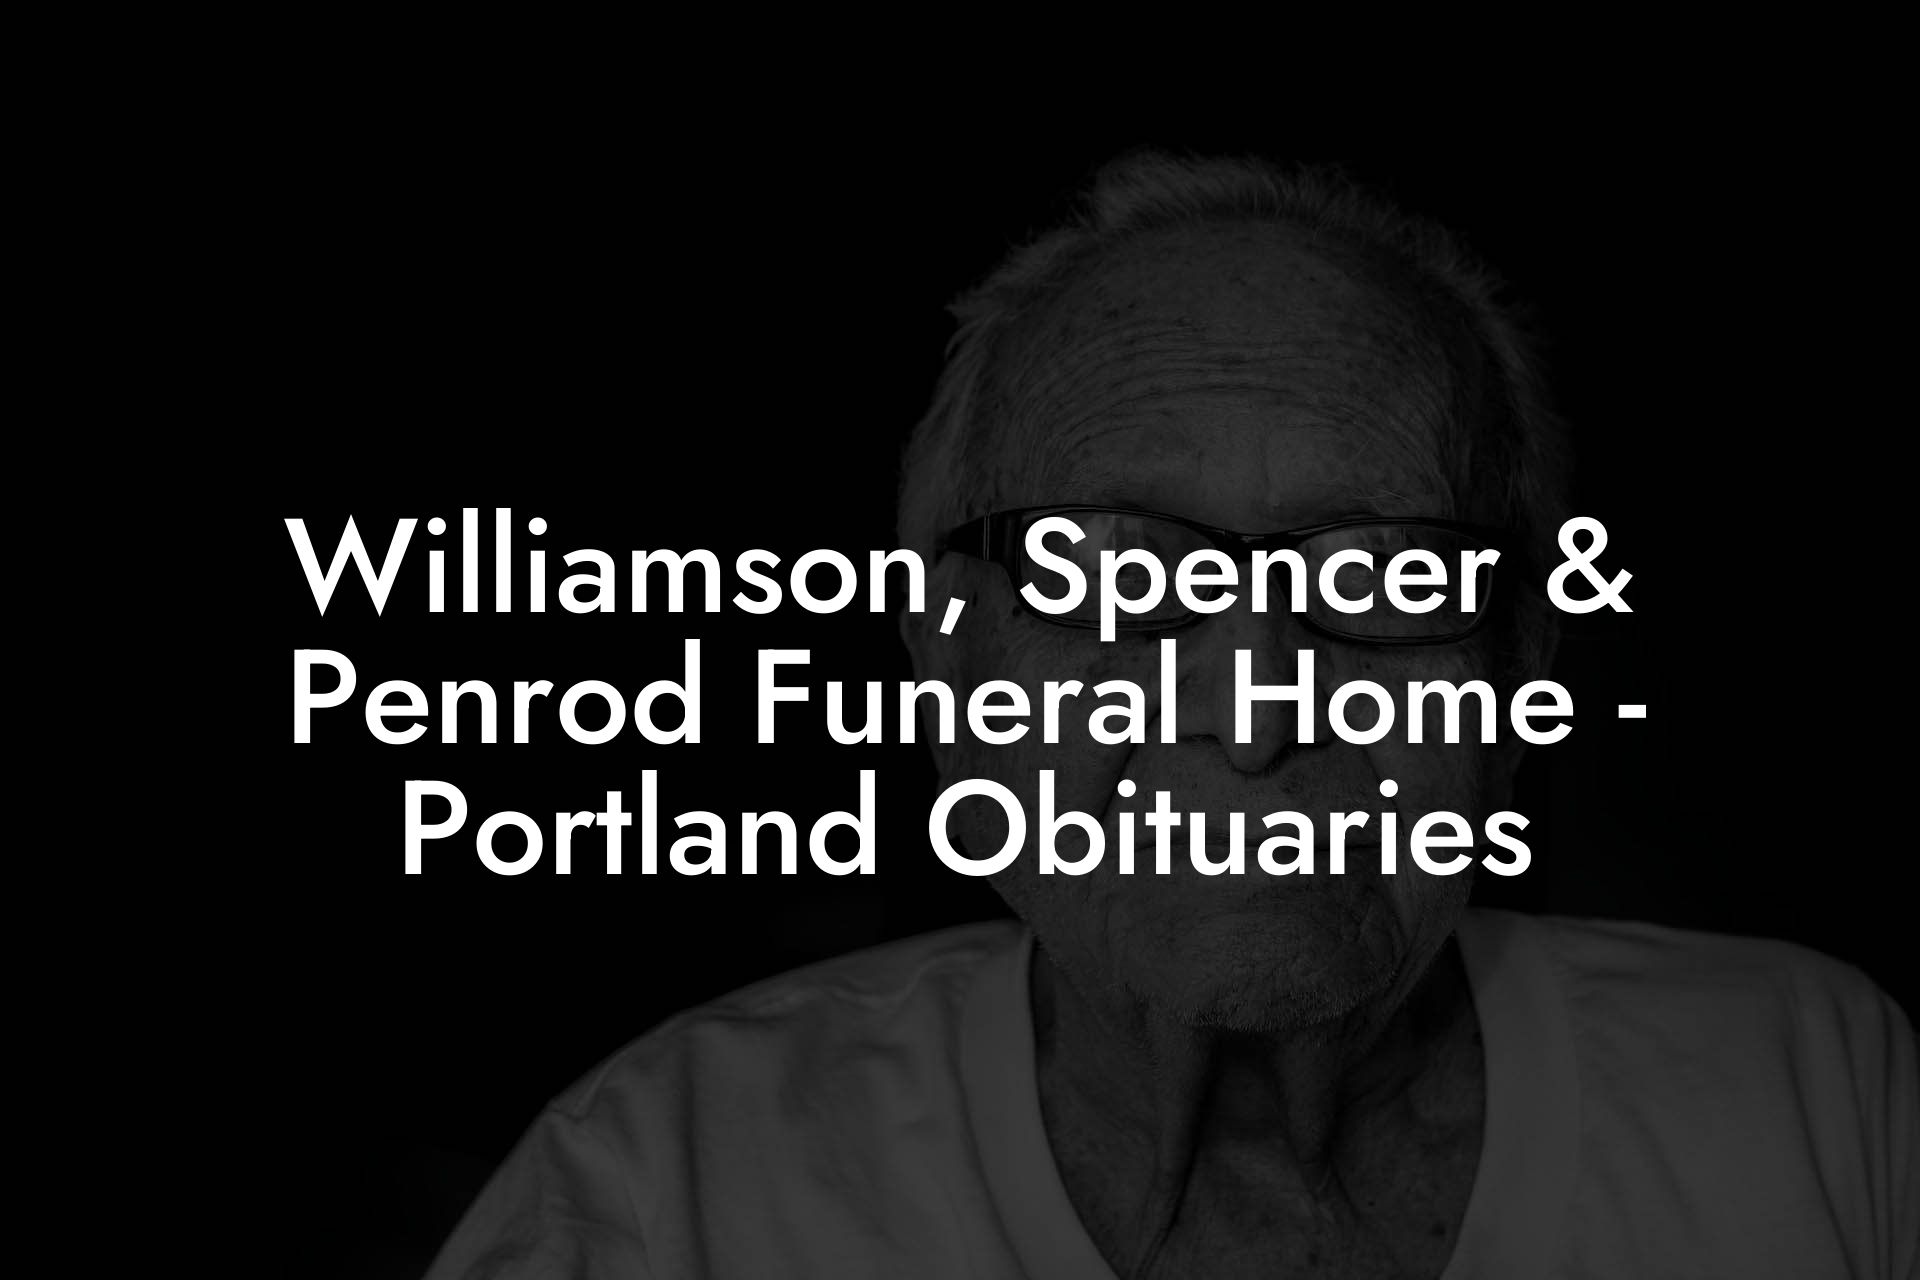 Williamson, Spencer & Penrod Funeral Home - Portland Obituaries